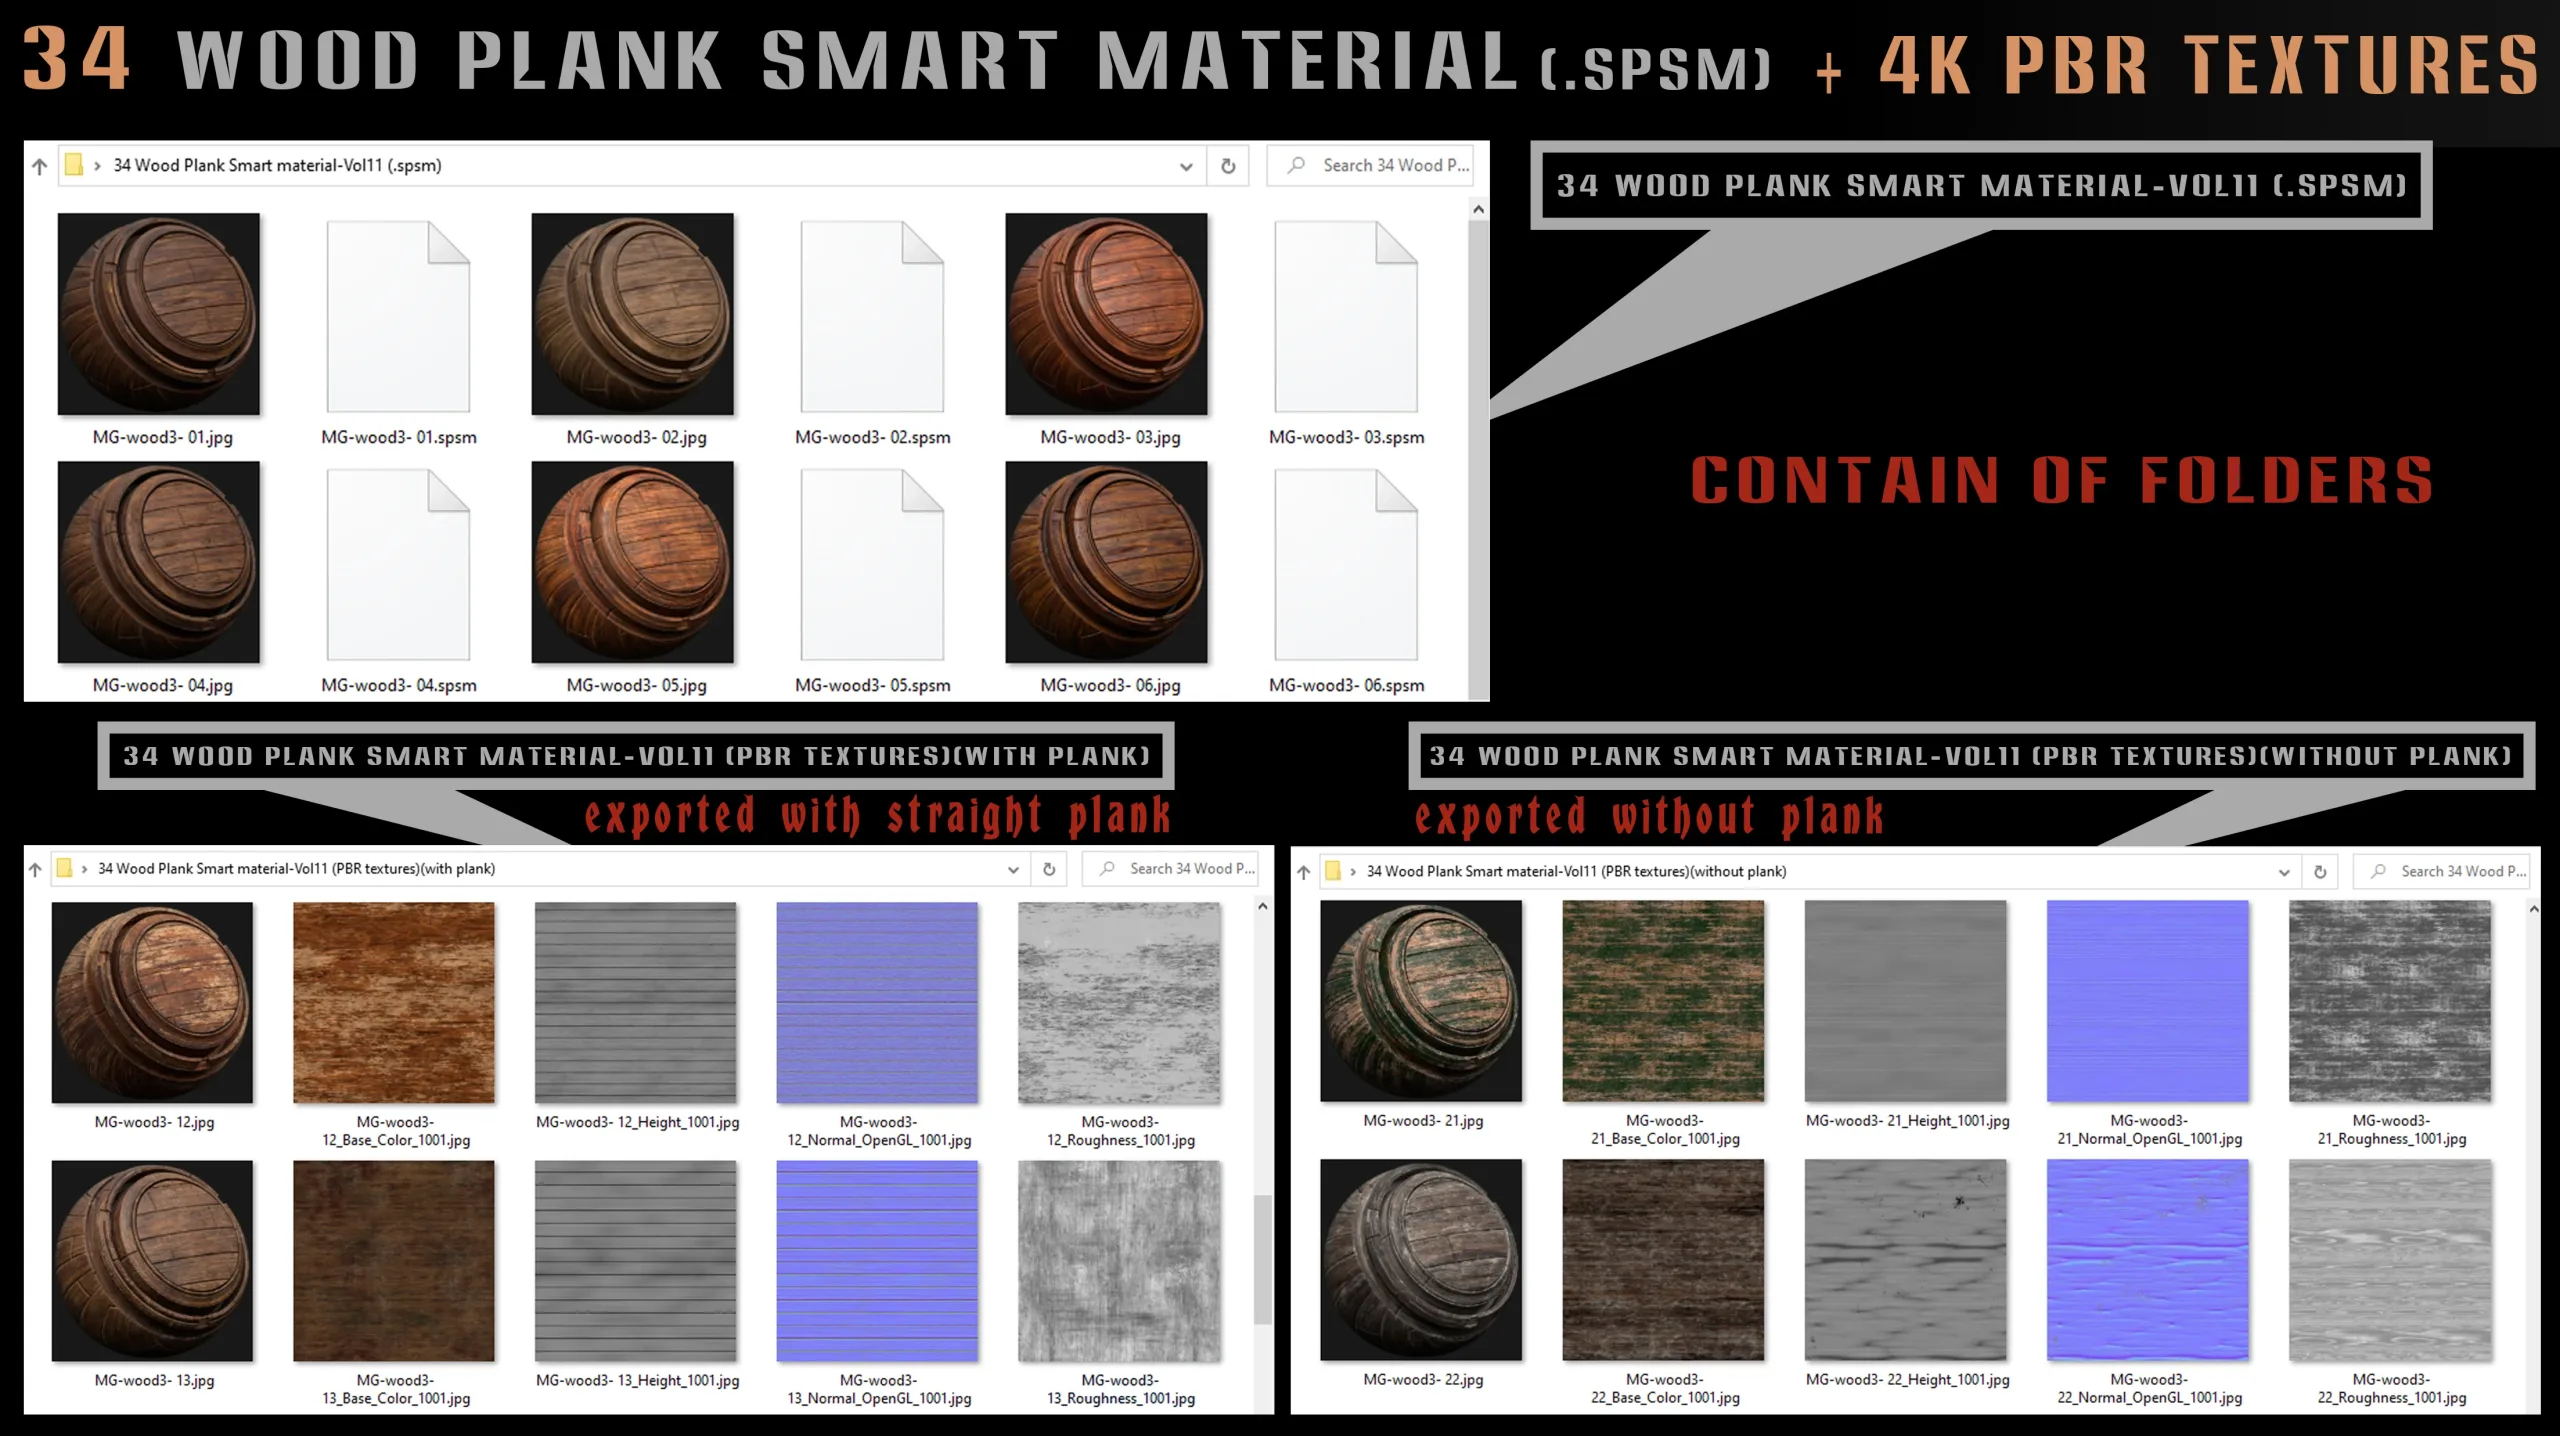 34 Wood plank smart material + 4k PBR textures - Vol 11